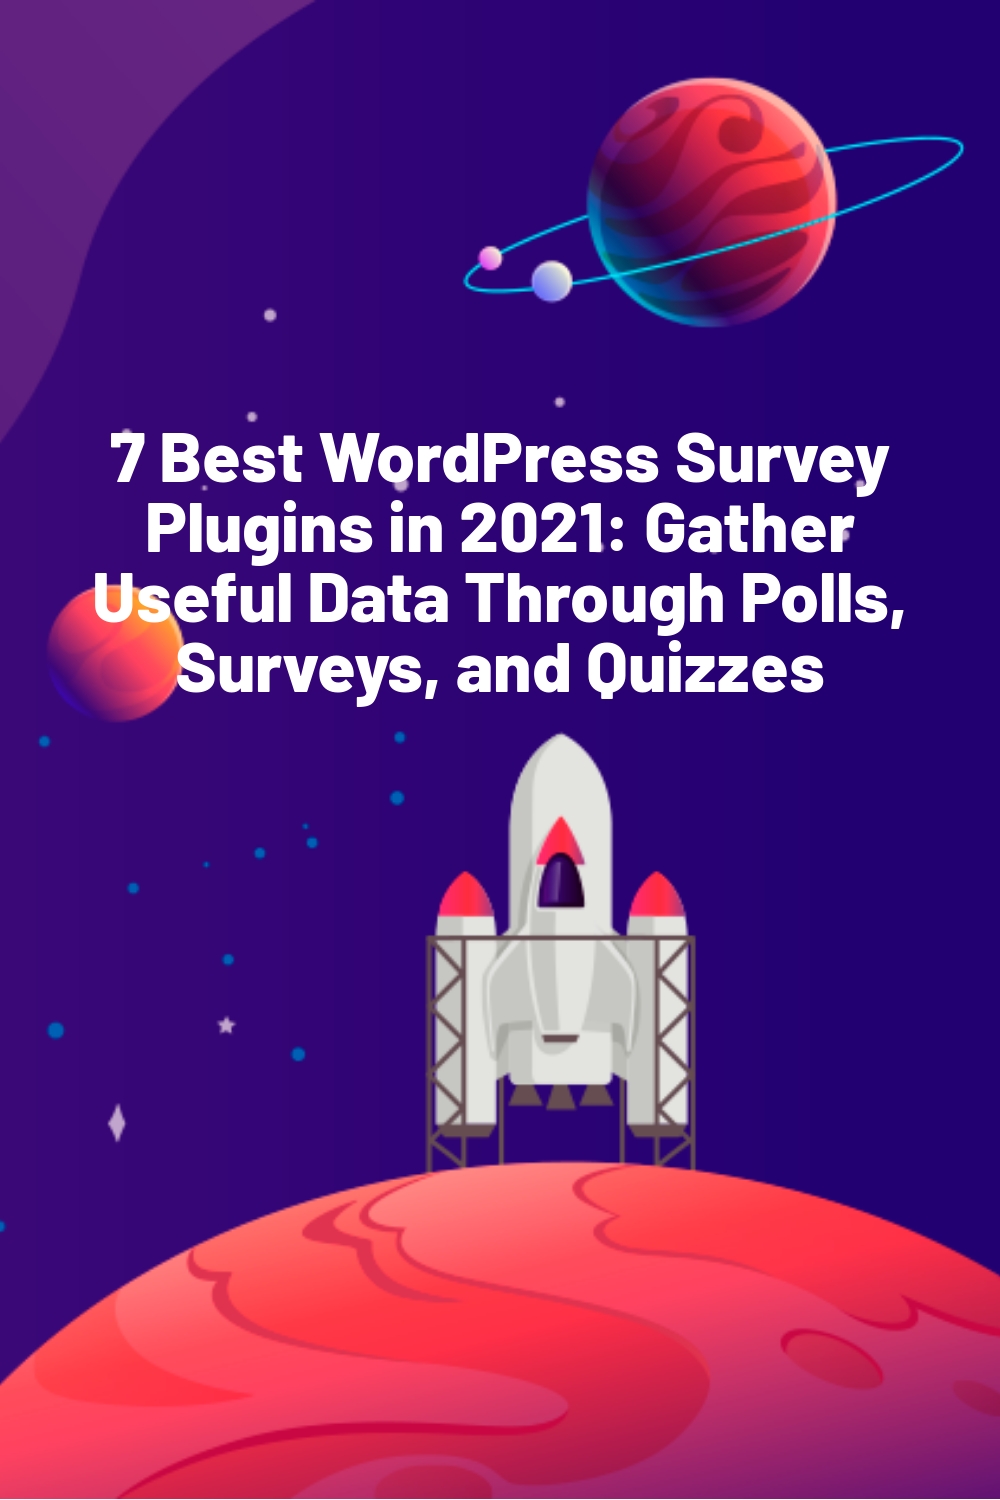 7 Best WordPress Survey Plugins in 2021: Gather Useful Data Through Polls, Surveys, and Quizzes